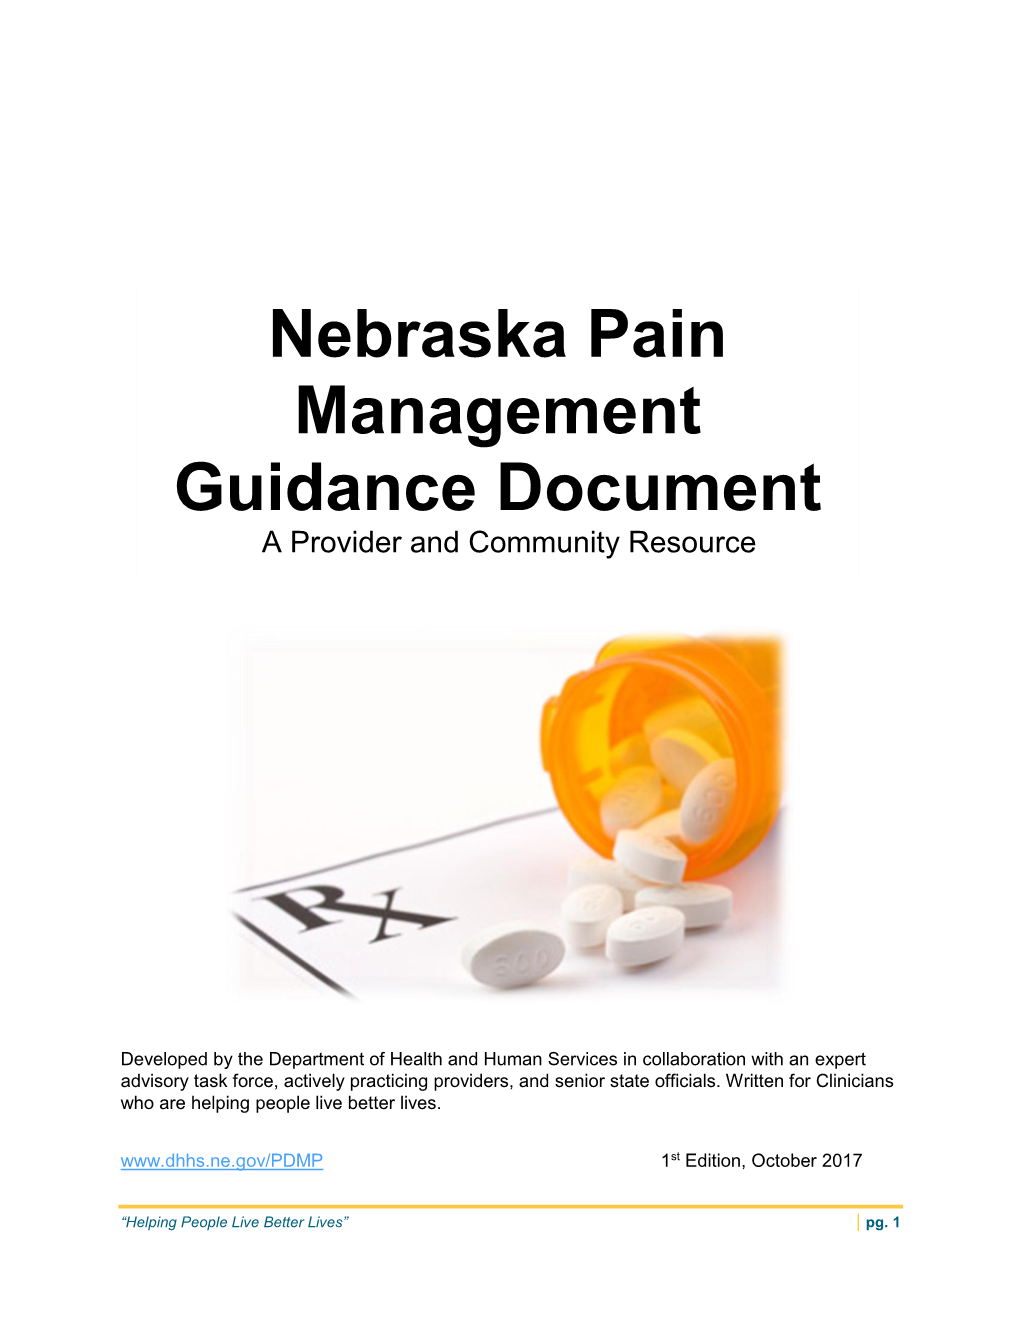 Pain Management Guidance Document